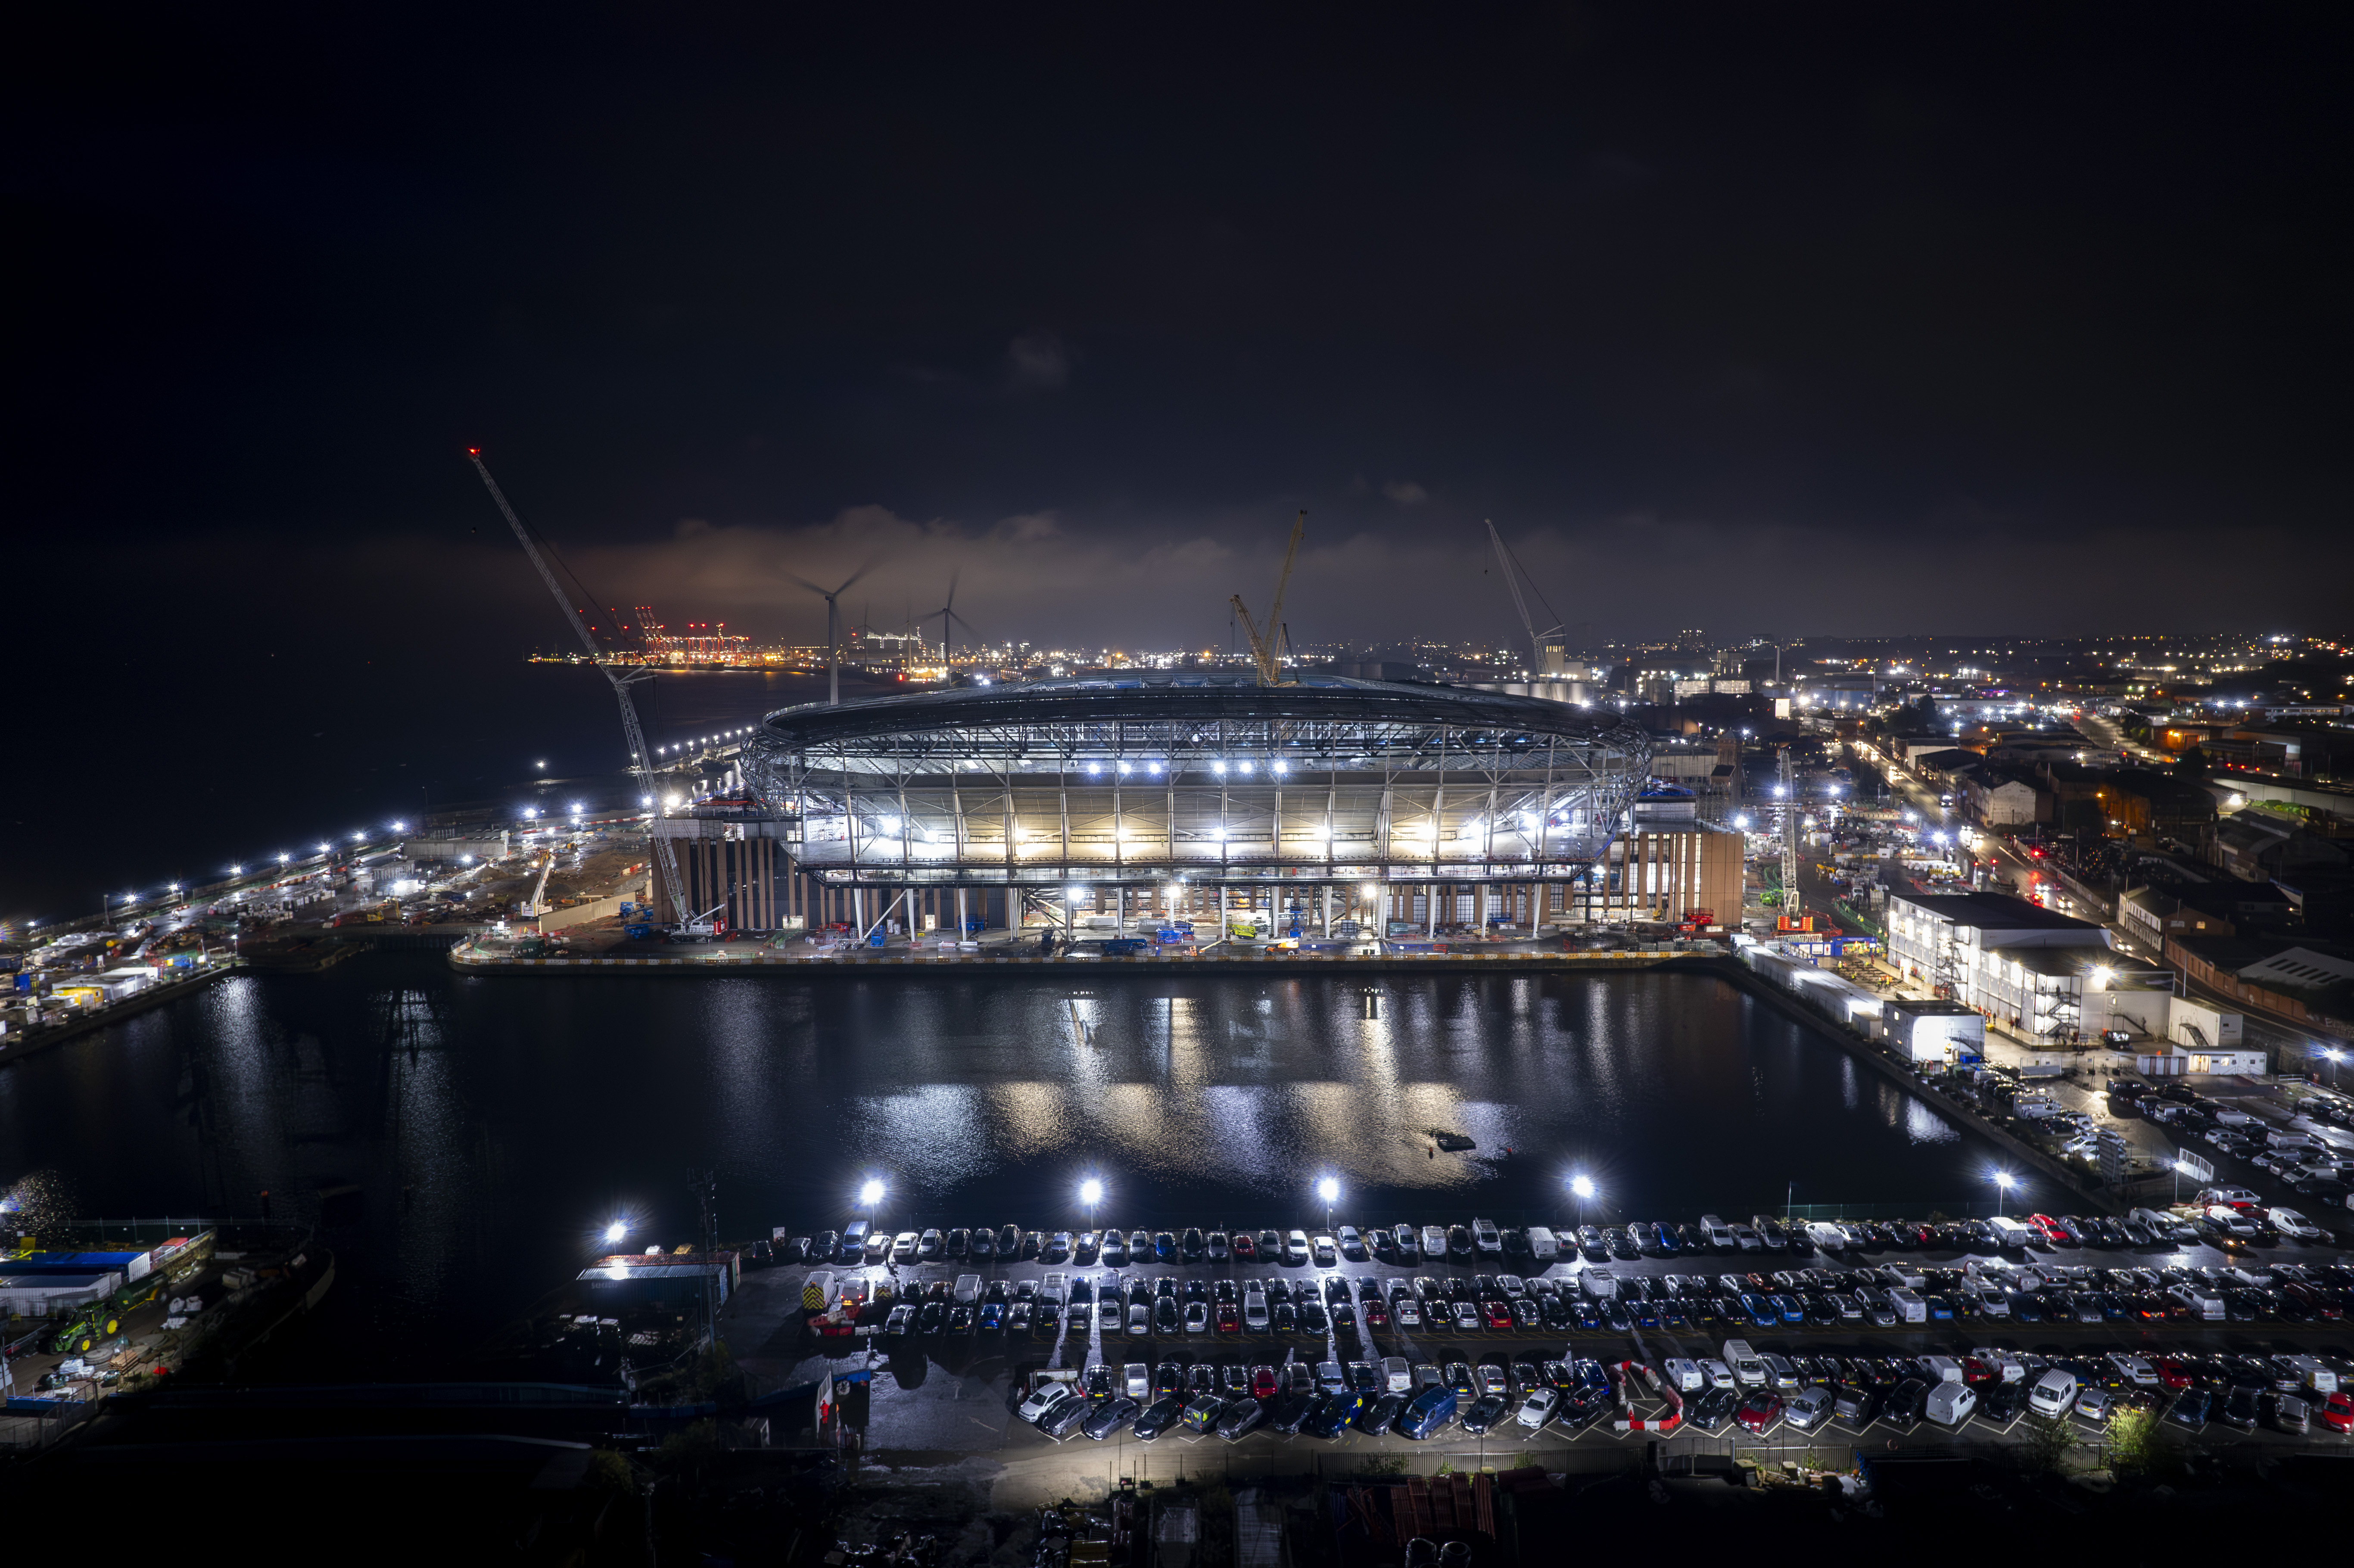 Aerial General Views of the New Everton Stadium